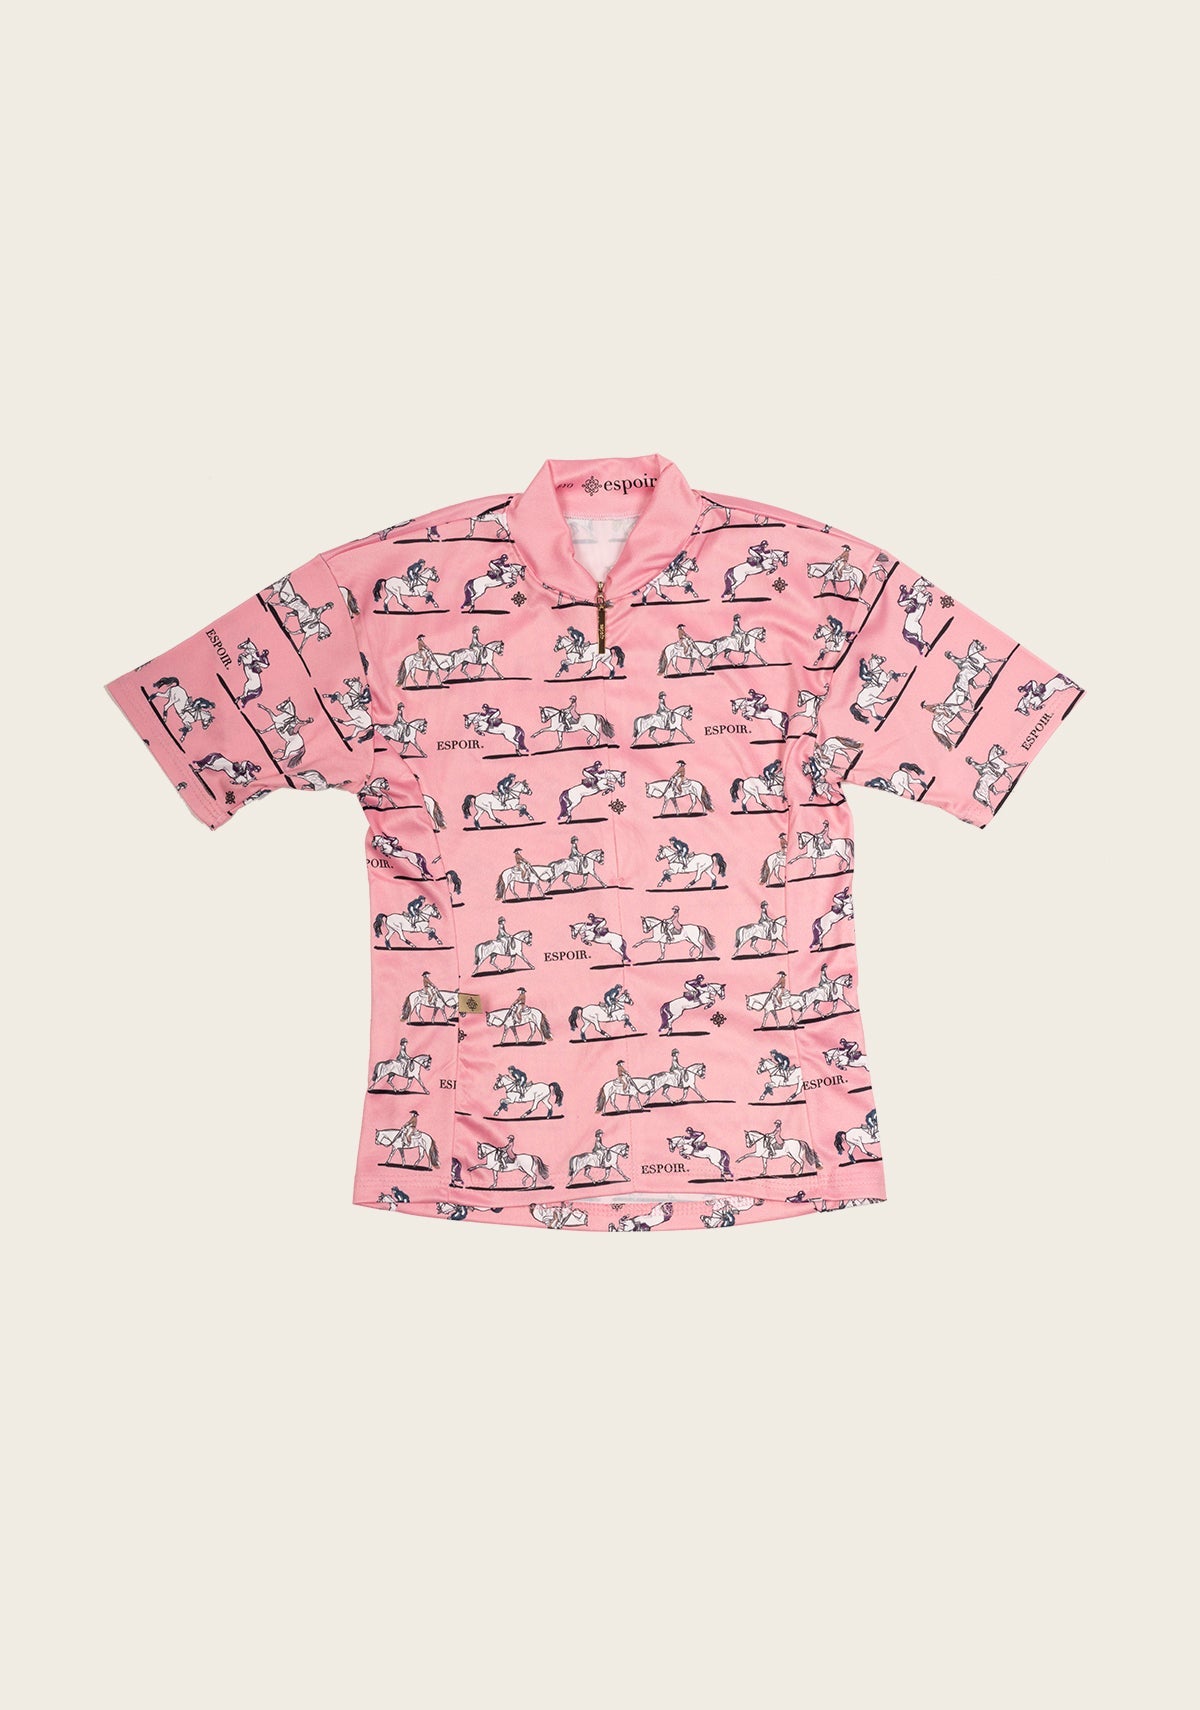 United Equestrian on Pink Children's Short Sleeve Shirt by Espoir Equestrian